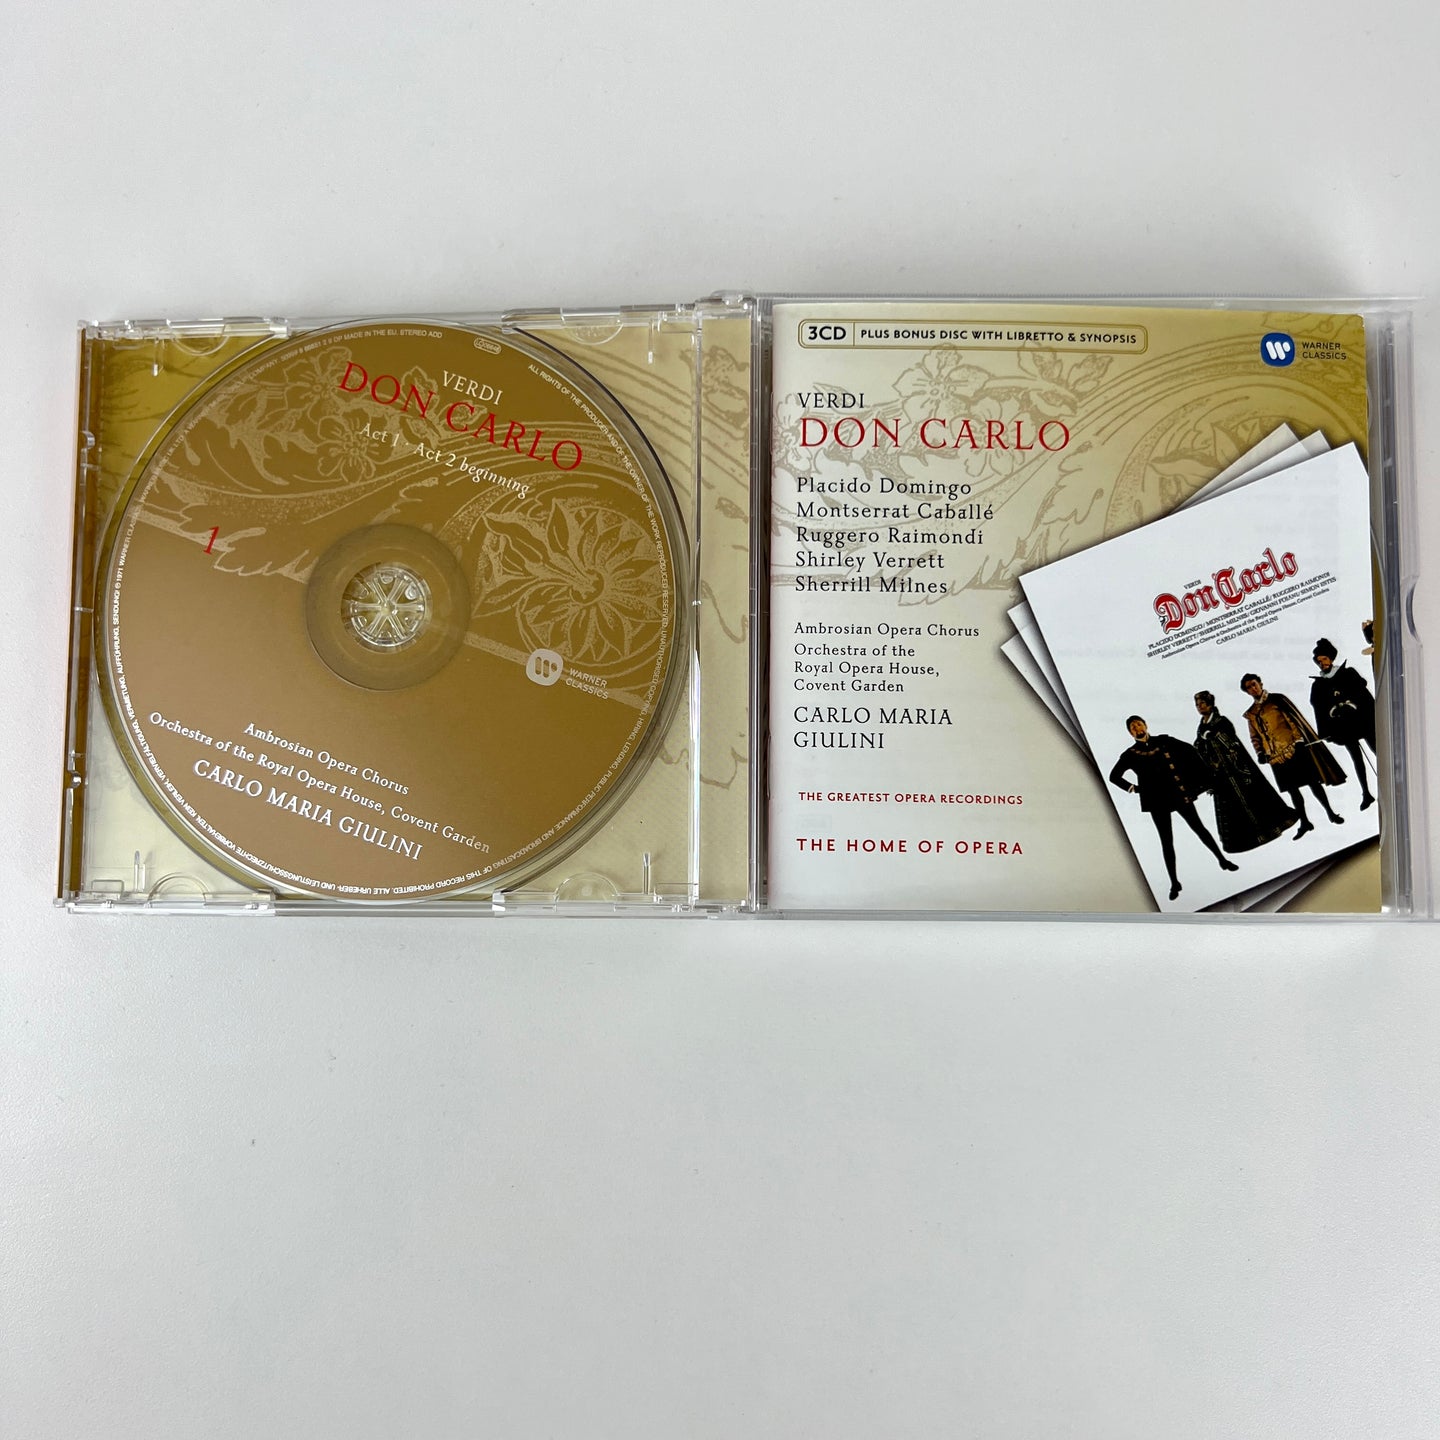 Verdi Don Carlo 3CD Plus Bonus Disc w Libretto & Synopsis